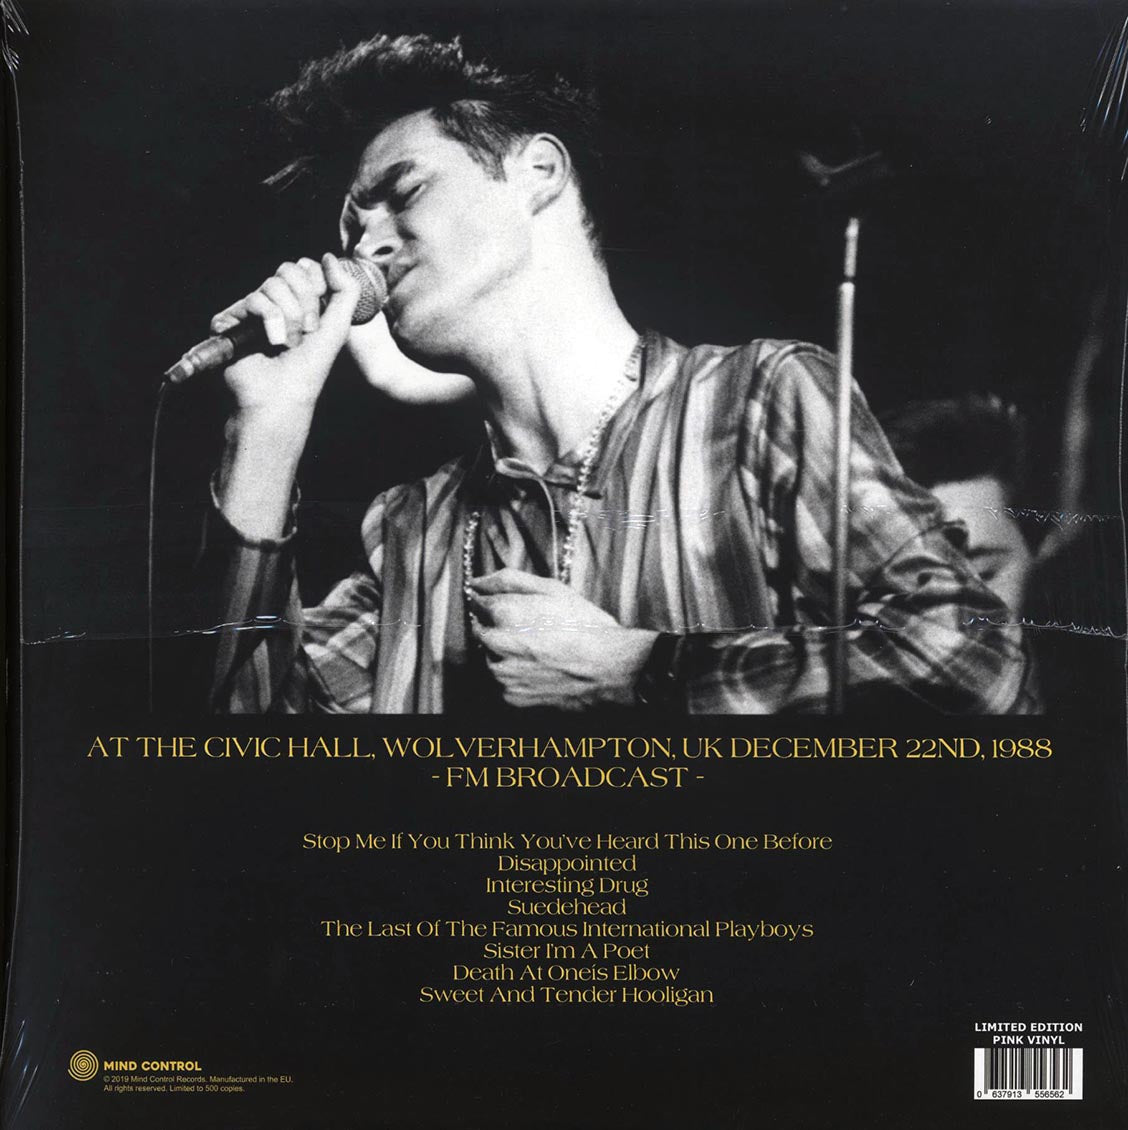 Morrissey - At The Civic Hall, Wolverhampton, UK December 22nd, 1988 (ltd. 500 copies made) (pink vinyl) - Vinyl LP, LP